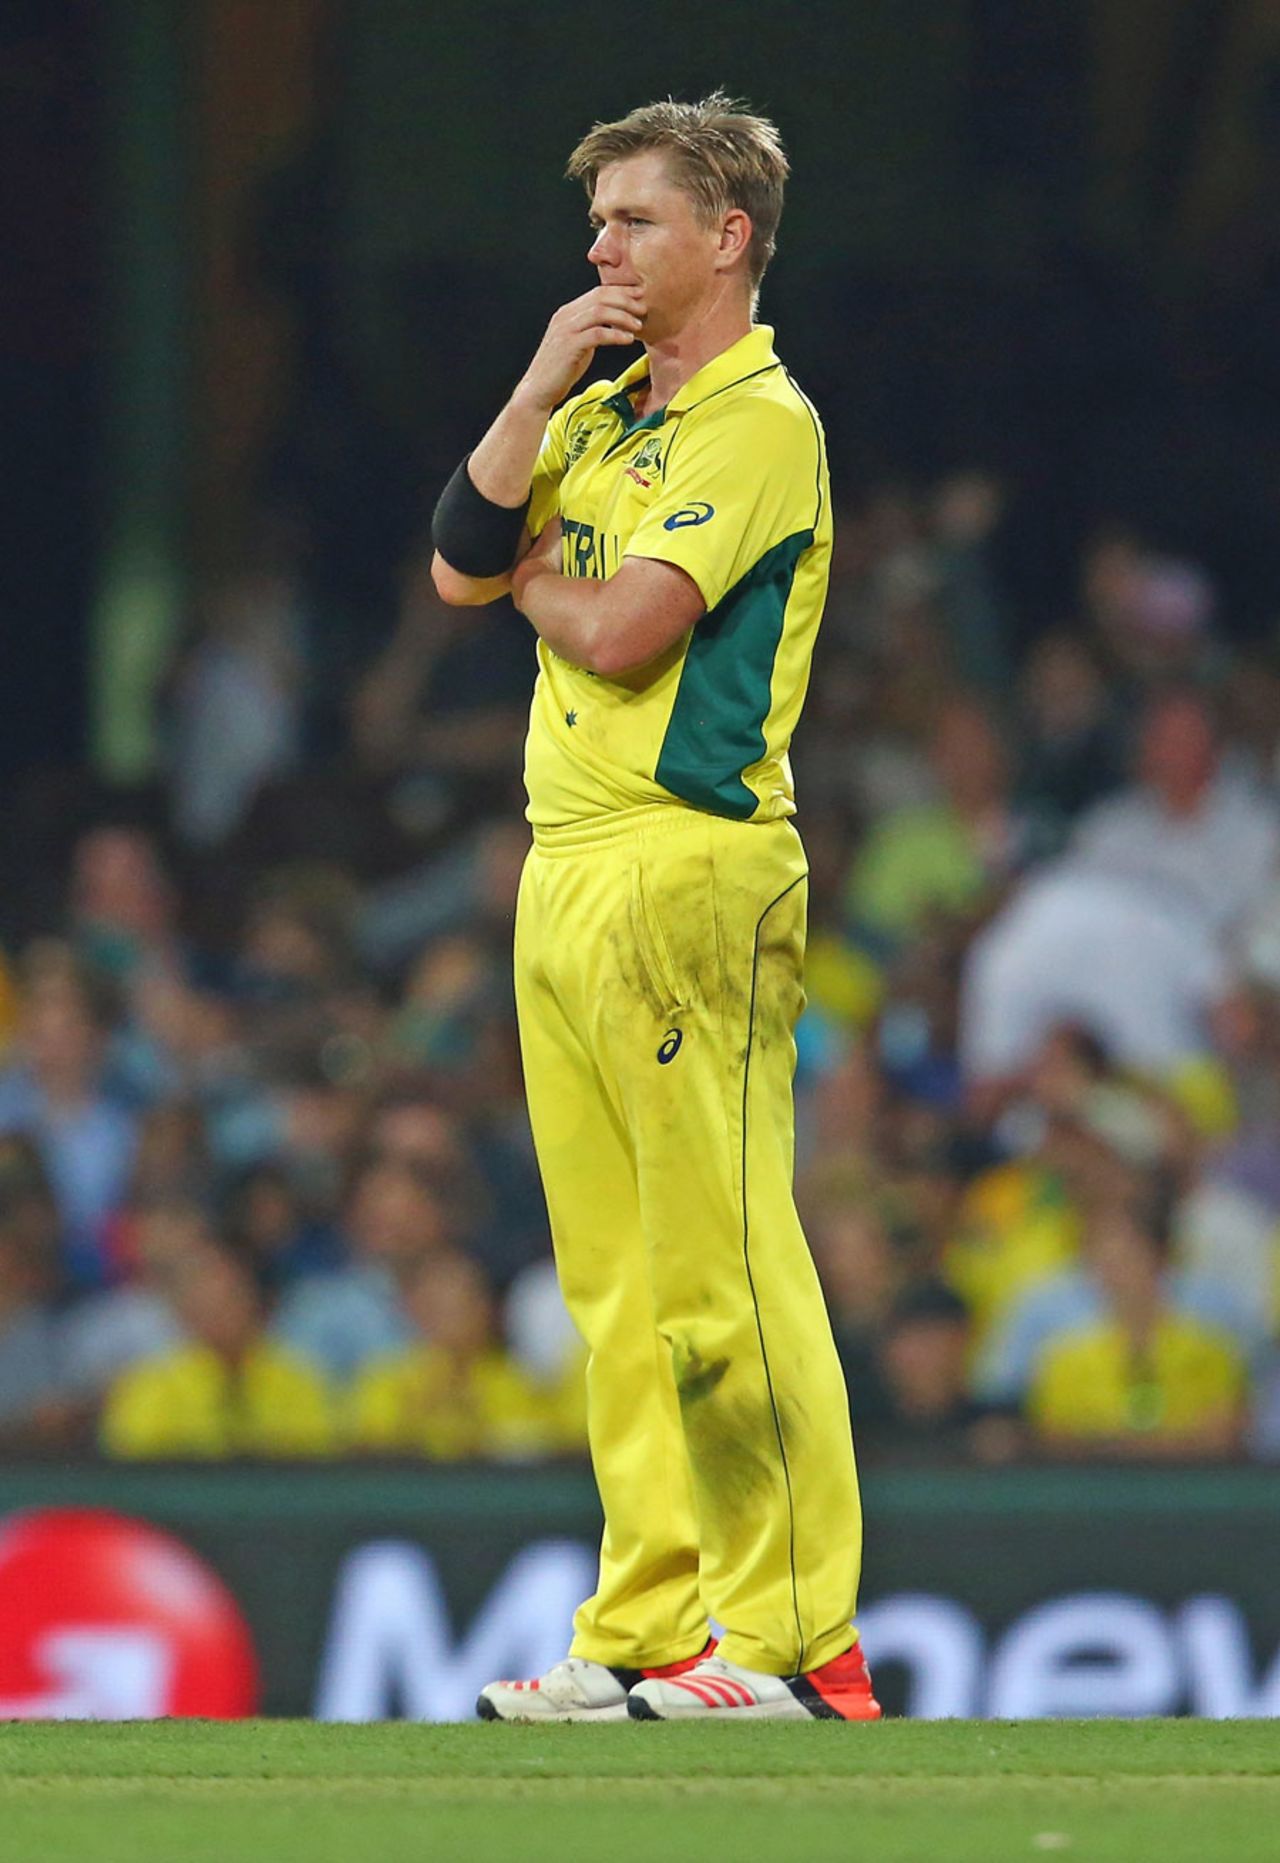 Xavier Doherty looks on during Sri Lanka's innings, Australia v Sri Lanka, World Cup 2015, Group A, Sydney, March 8, 2015